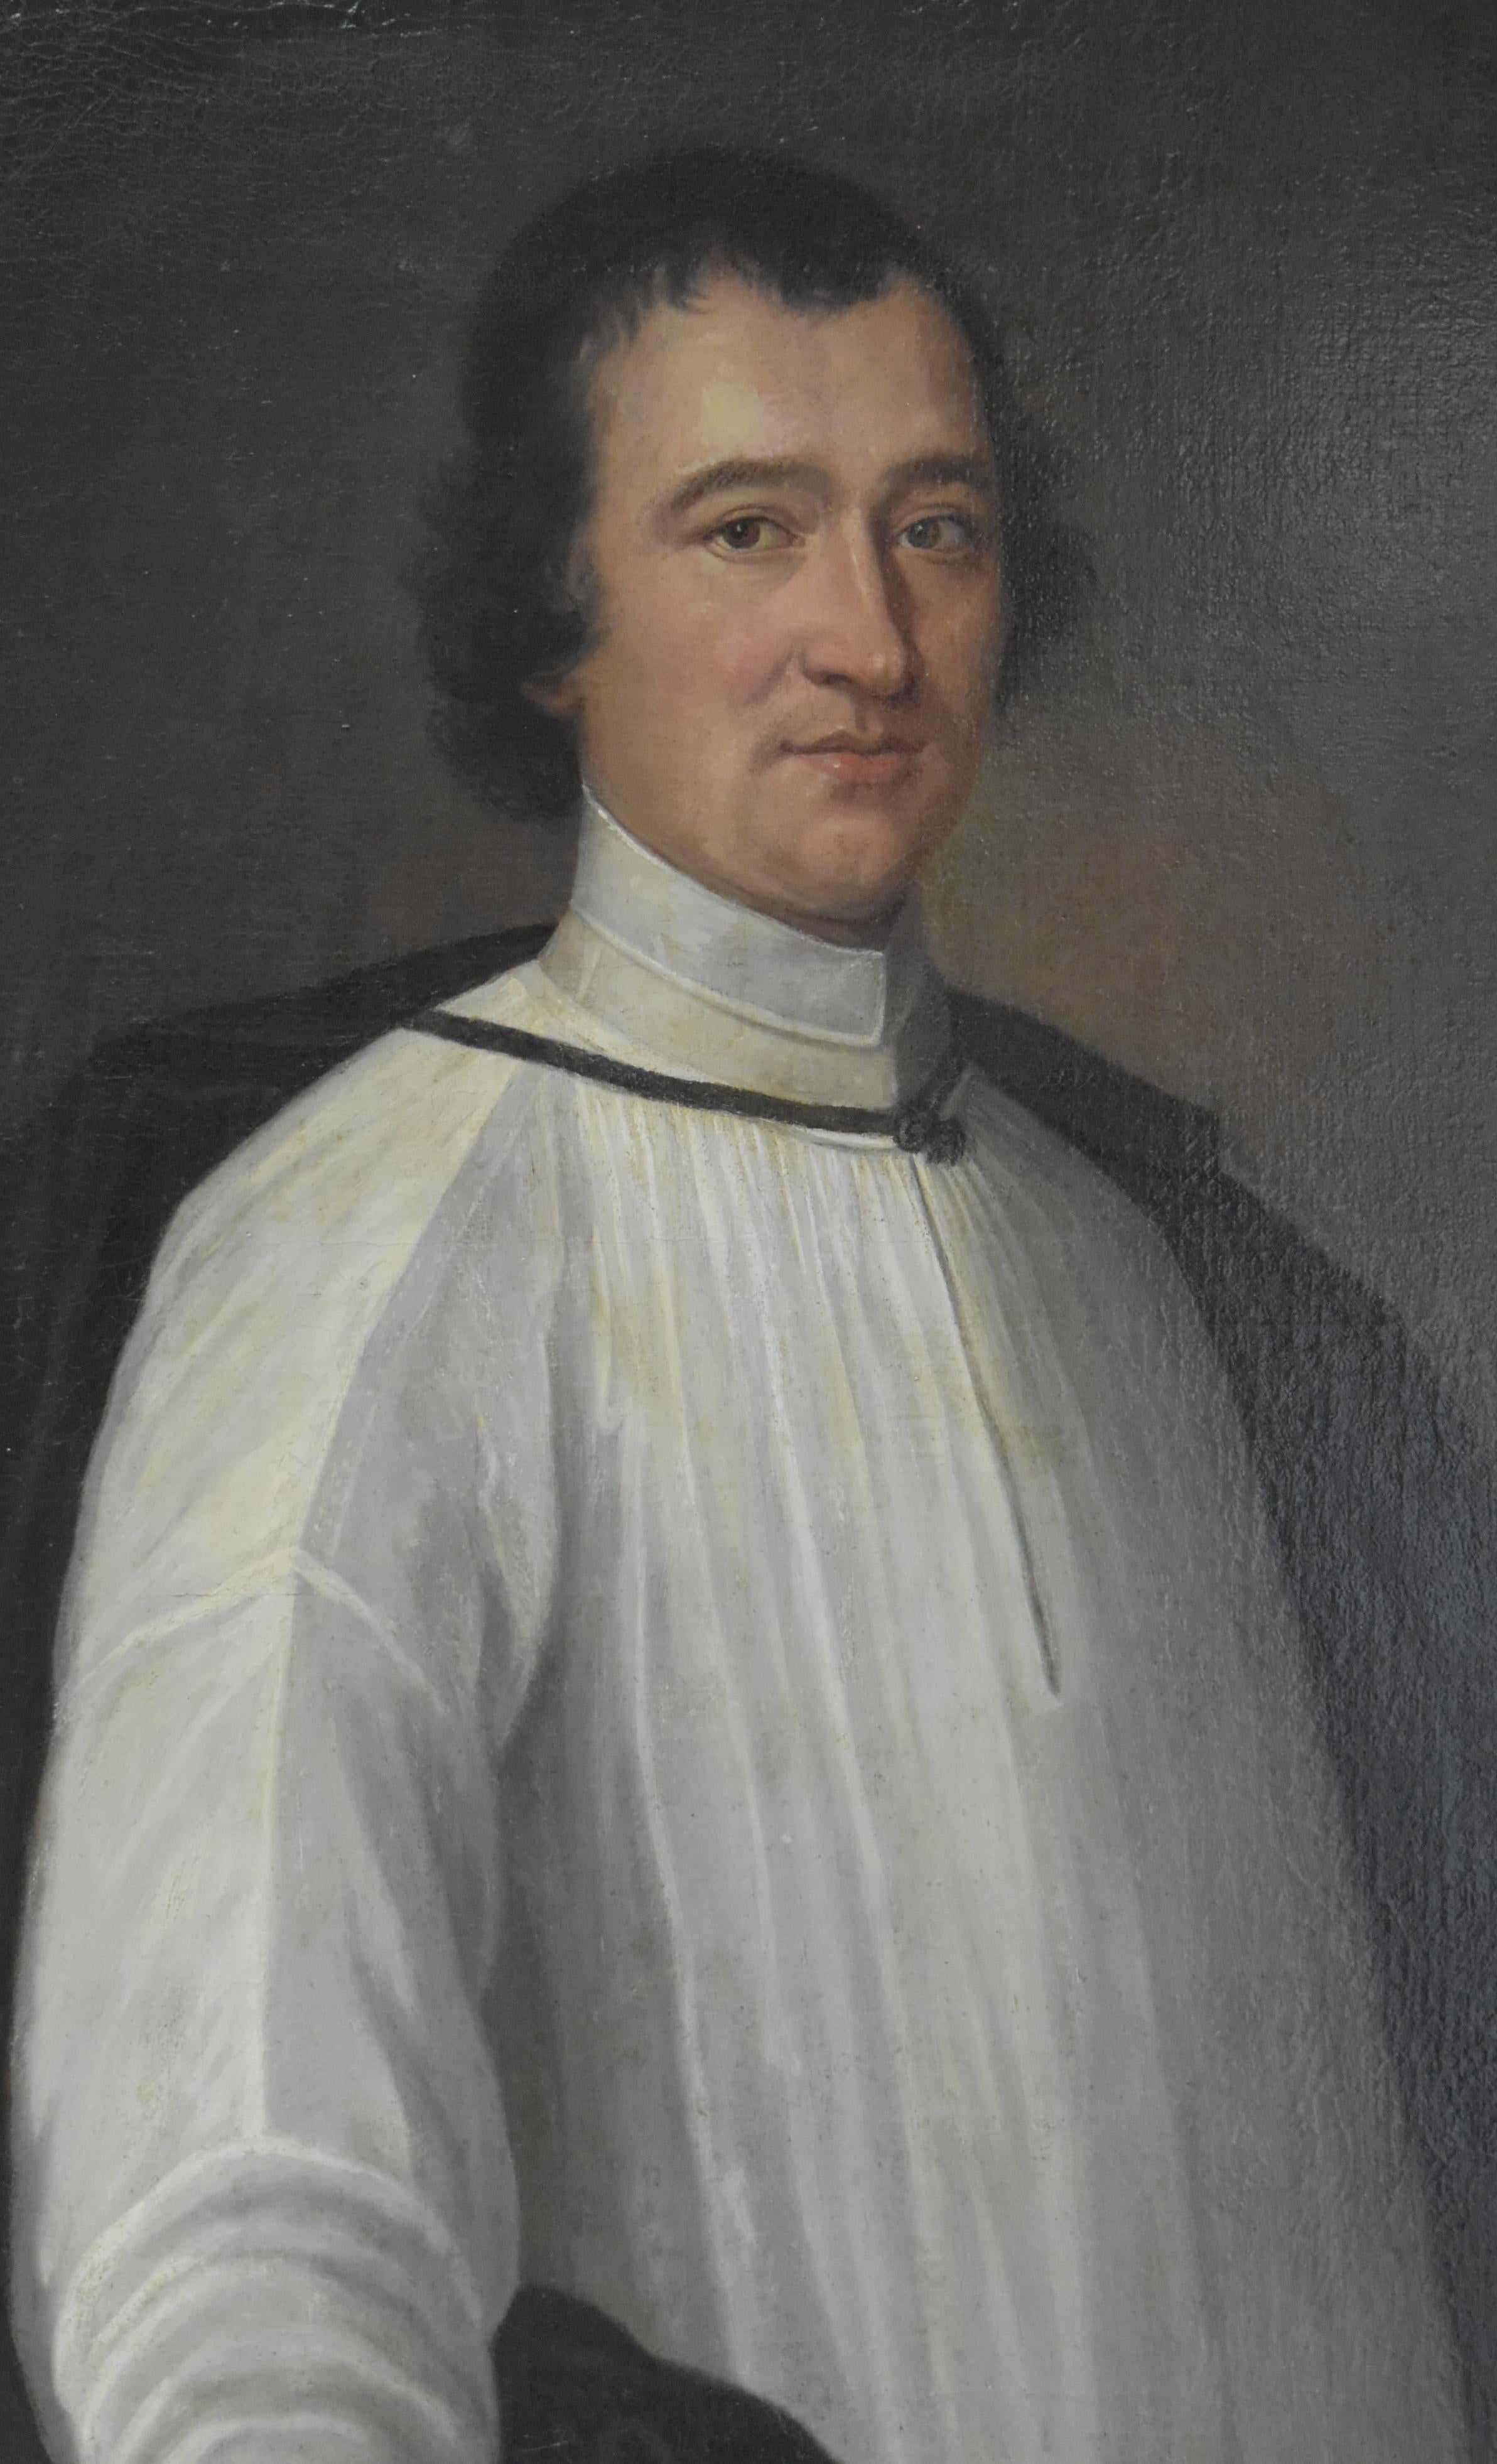 18th century priest